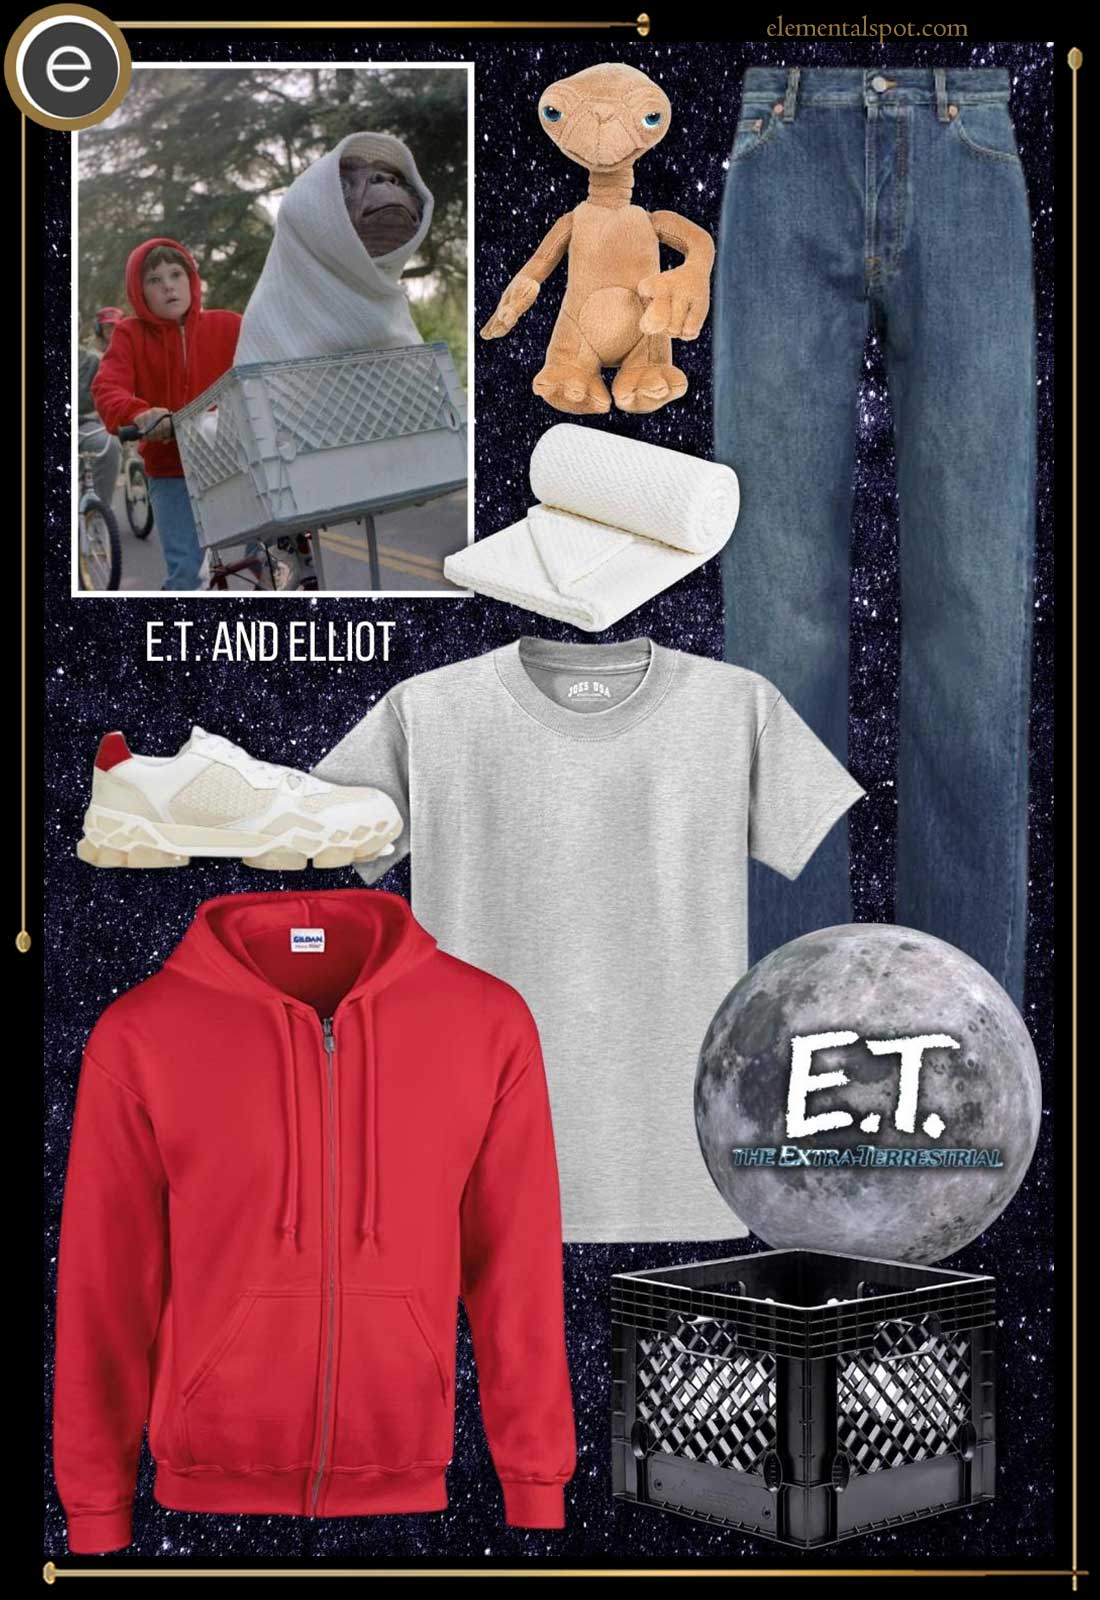 Dress Up Like ET and Elliot from ET - Elemental Spot